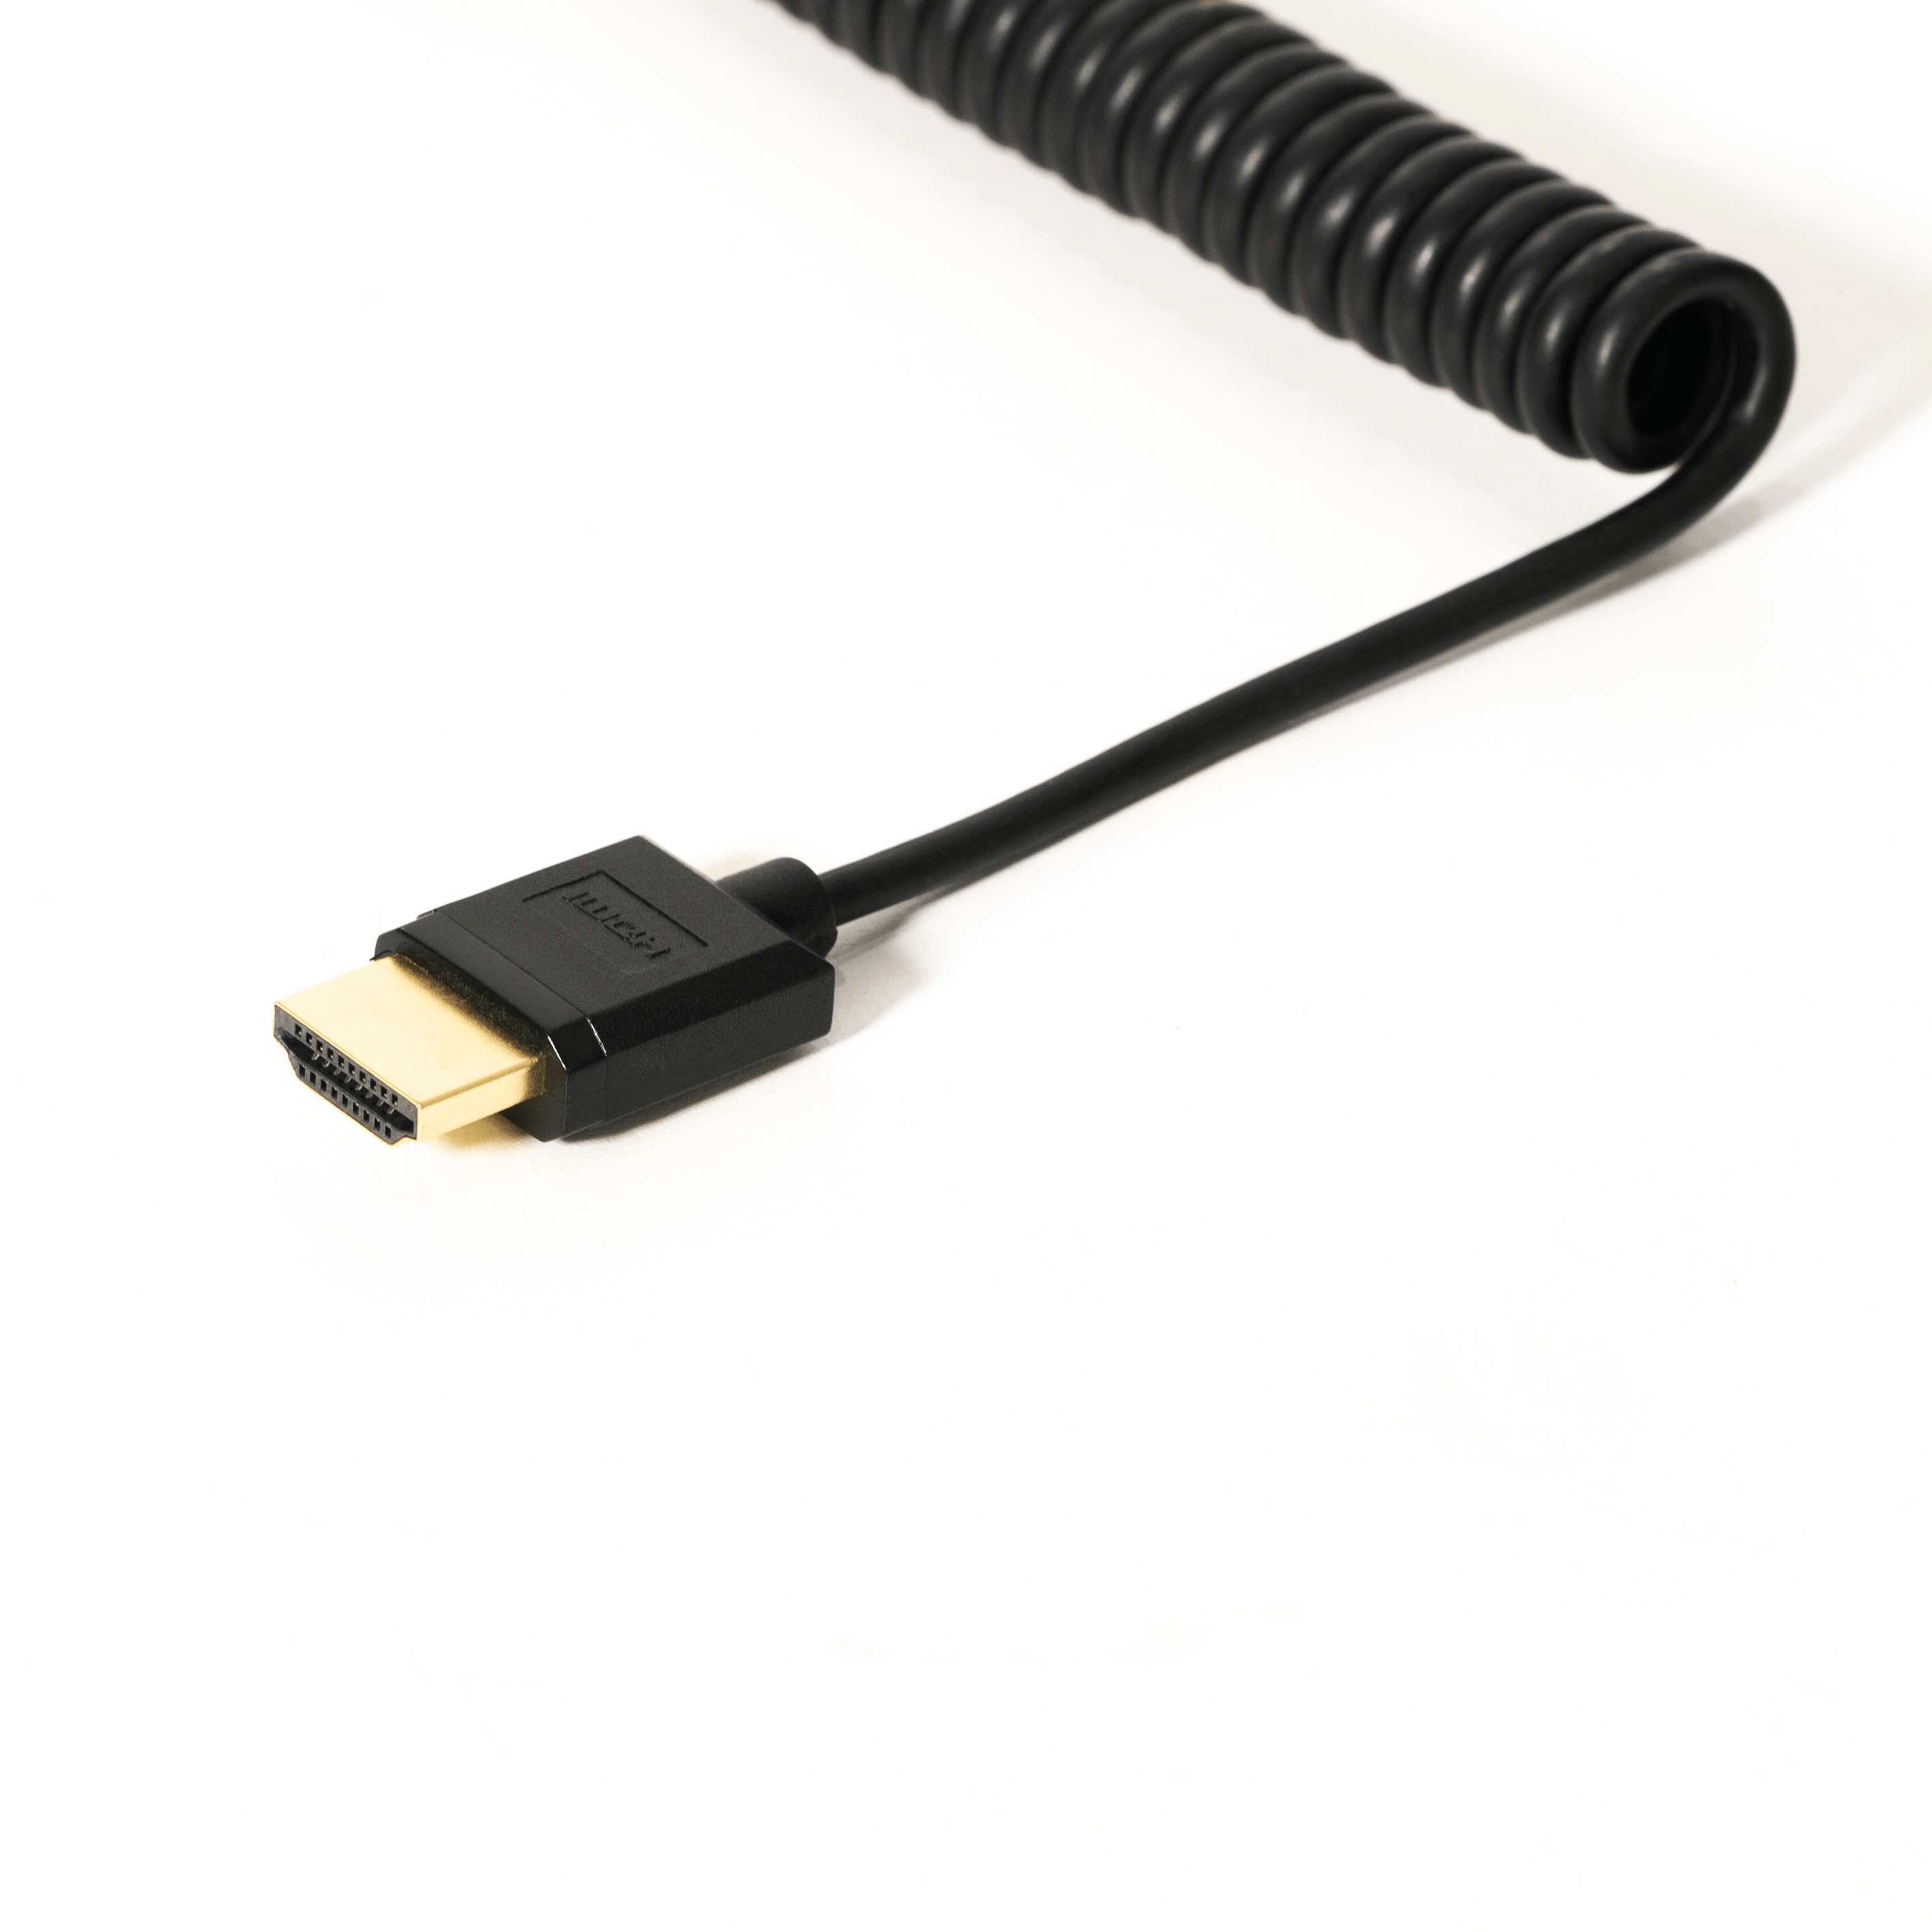  Duttek Cable HDMI a Micro HDMI de 90 grados 8K, corto extremo  delgado hacia abajo micro HDMI macho a HDMI hembra Cable de extensión  compatible con 48Gbps 8K Ultra HD Video